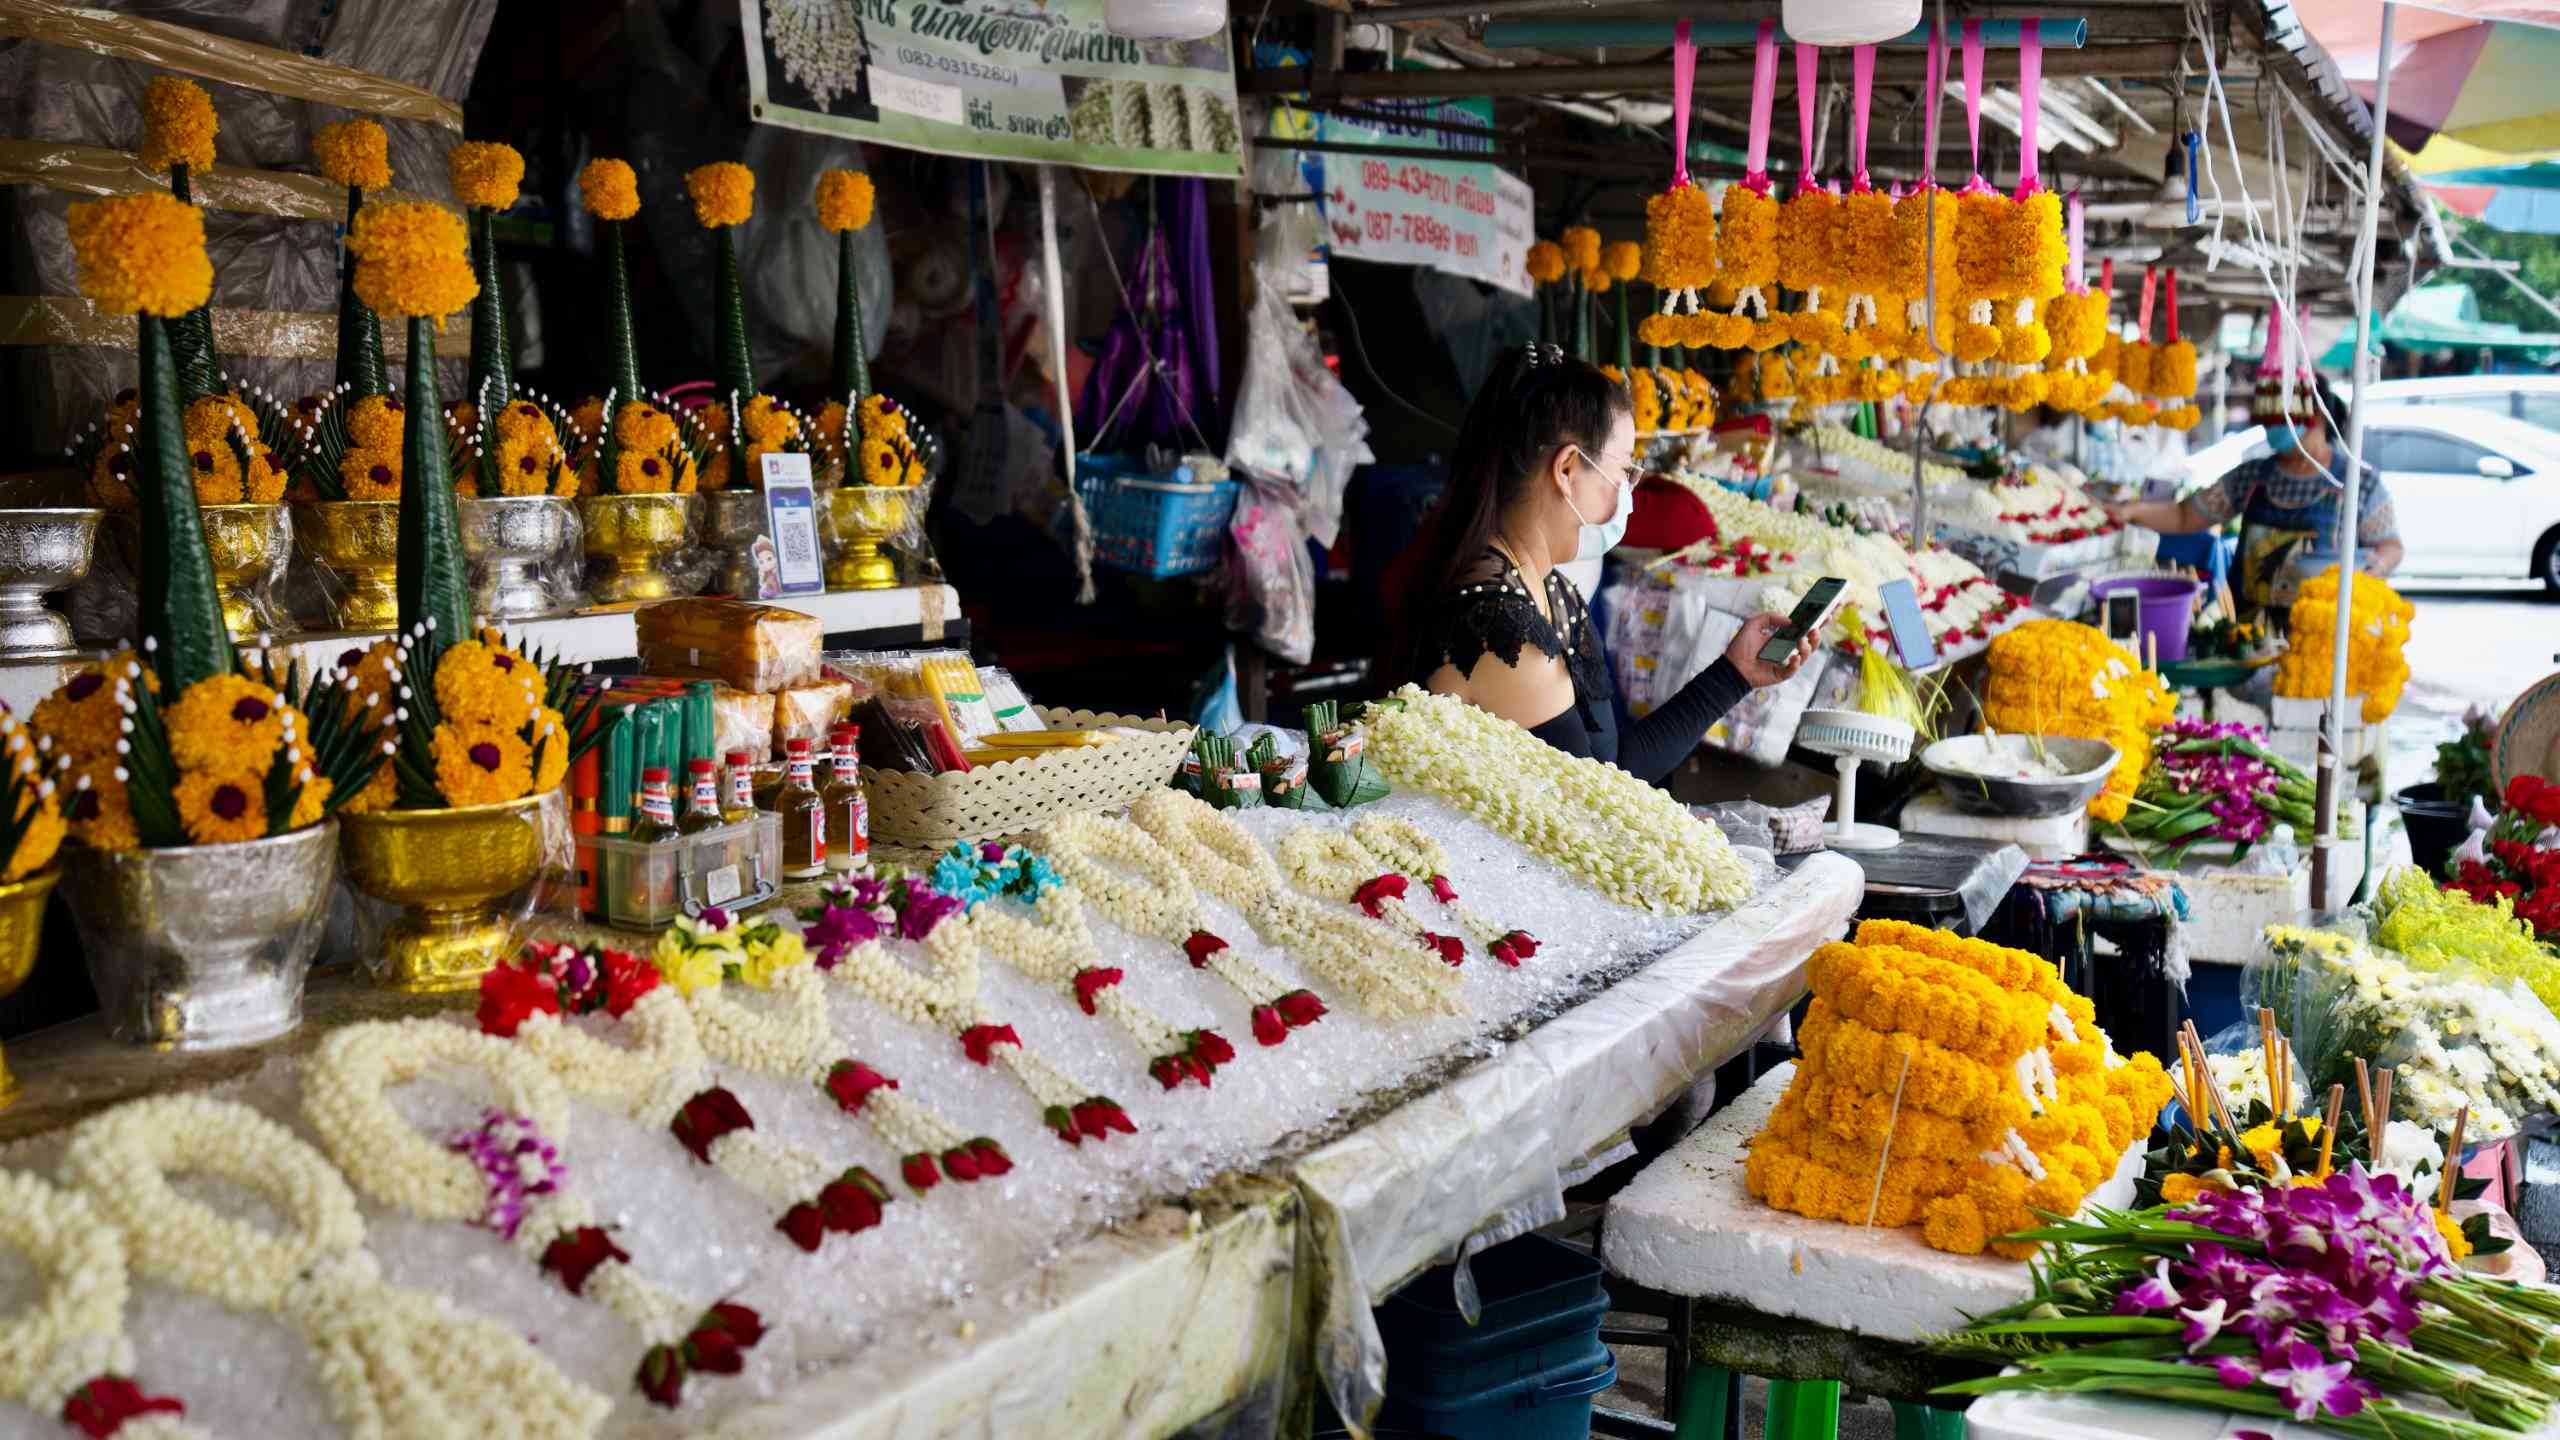 Wararos Market in Chiang Mai